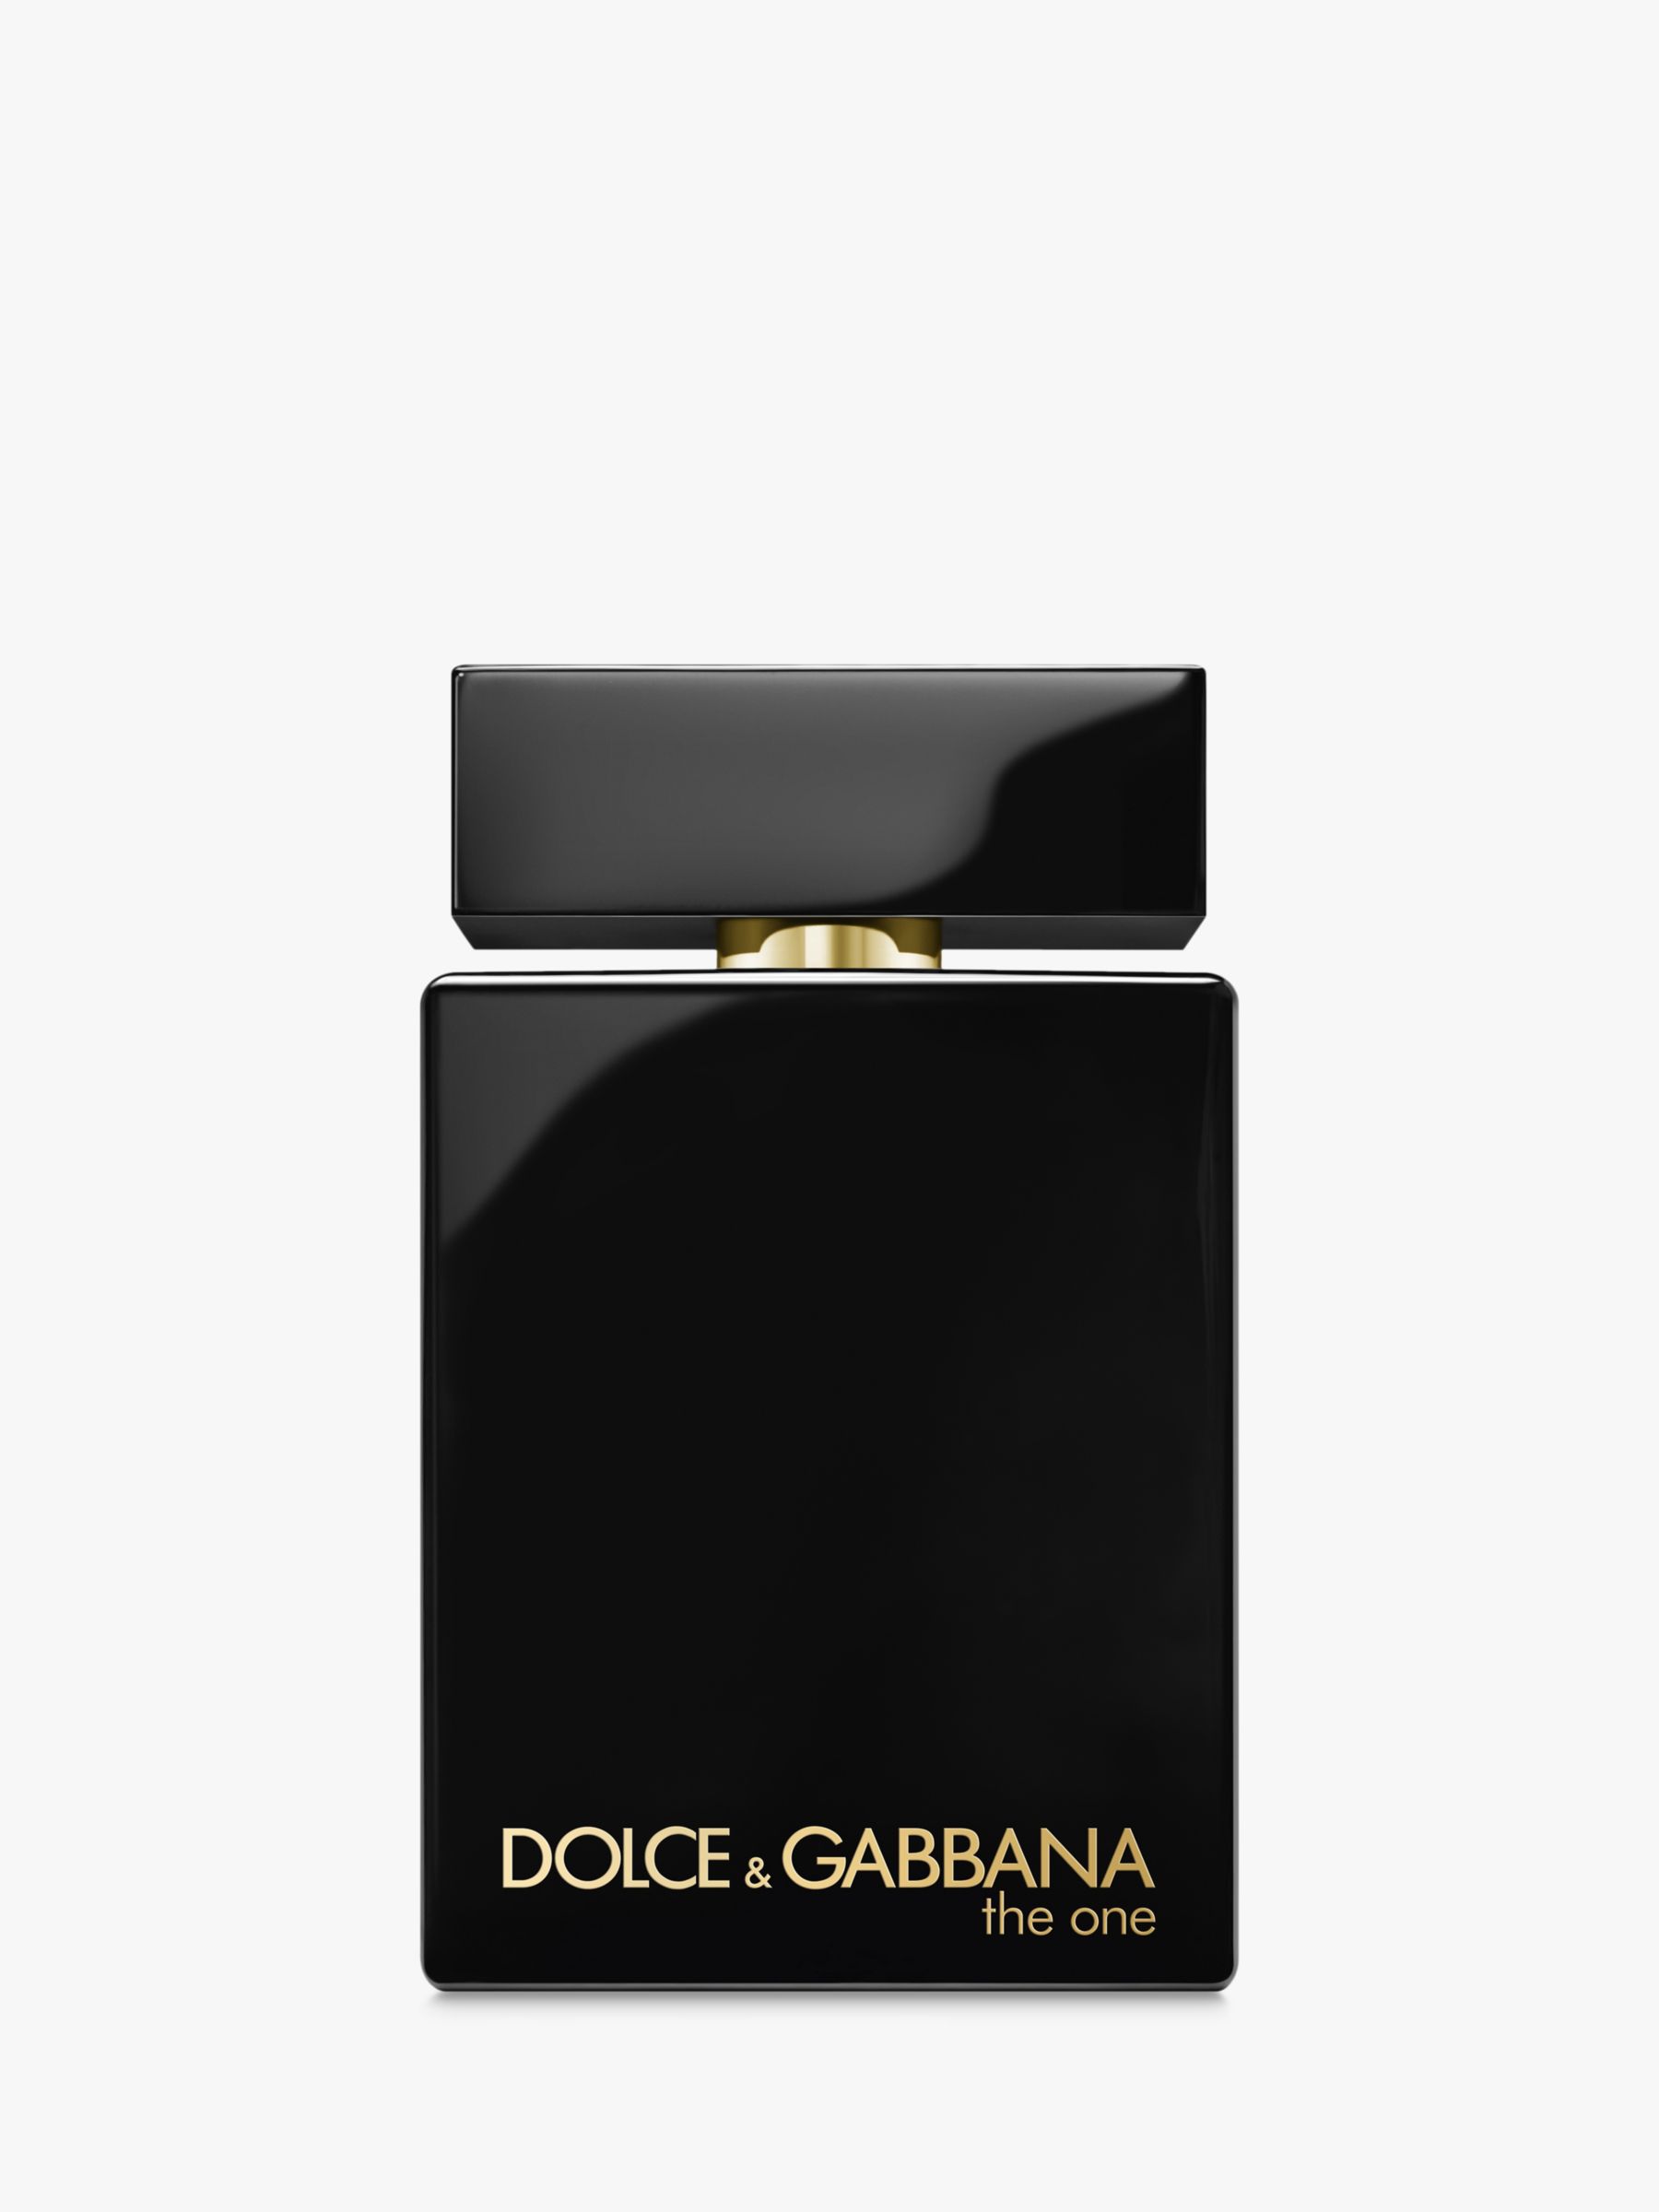 Dolce & Gabbana The One for Men Eau de Parfum Intense, 50ml 1